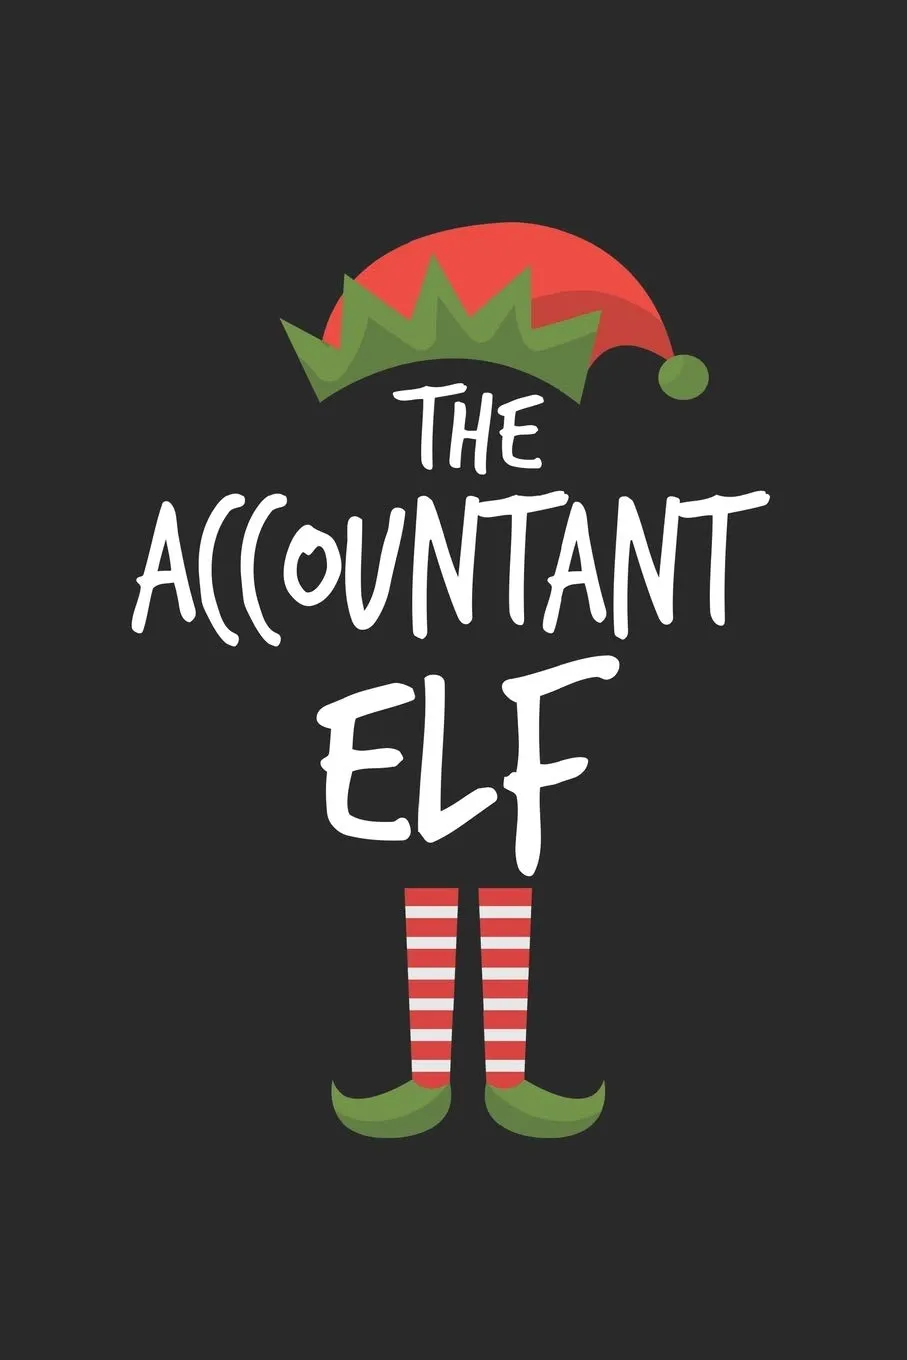 Interview Series - Santa's Accountant